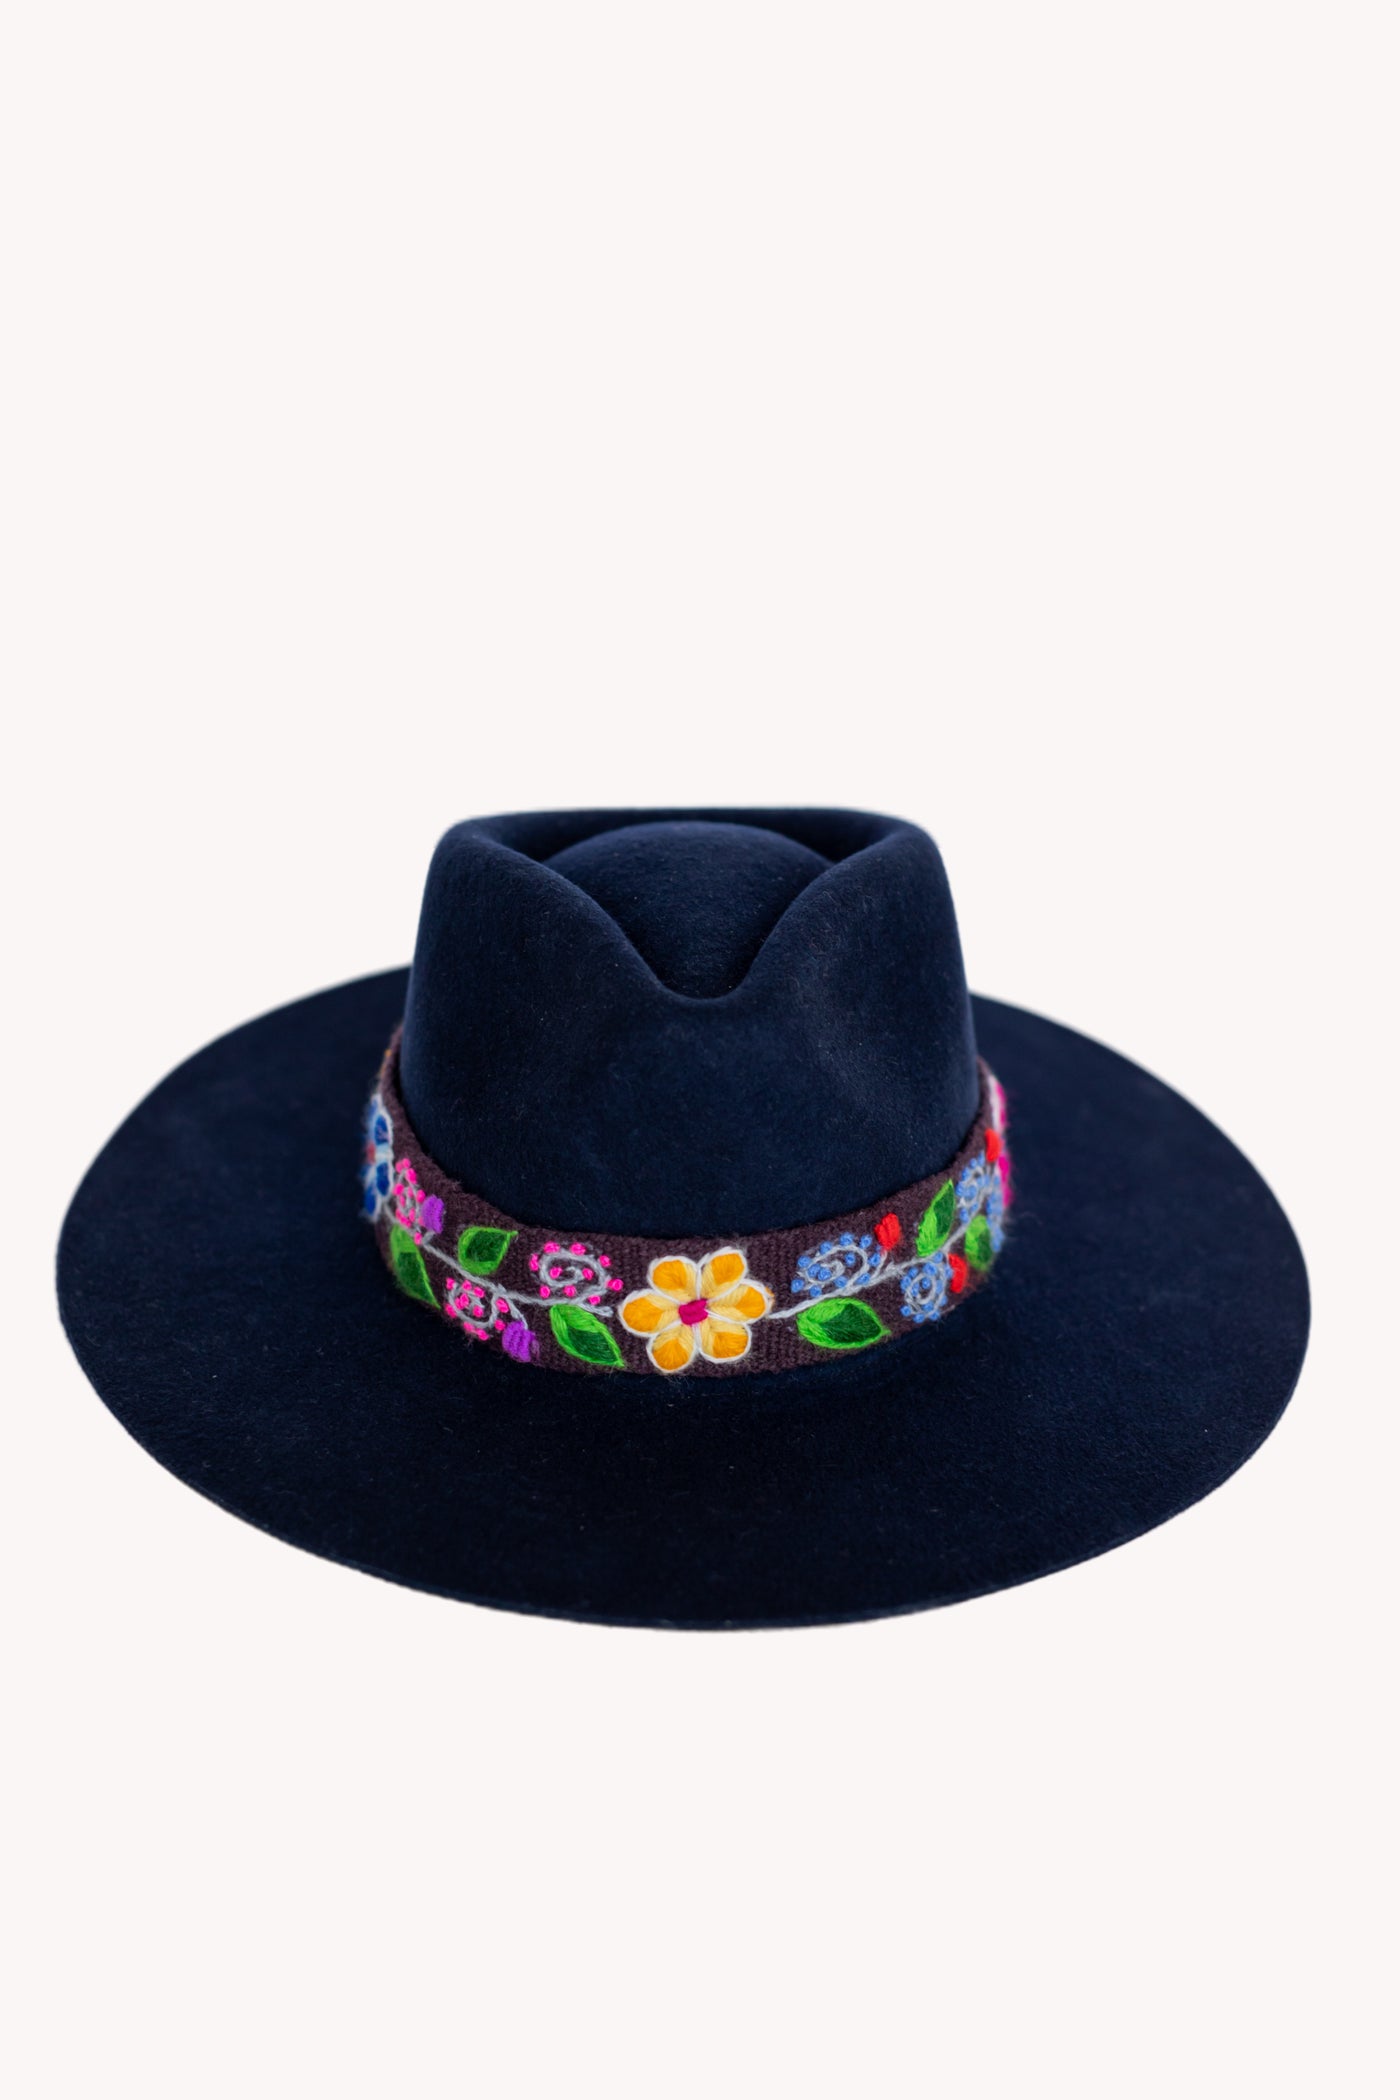 blue western style hat